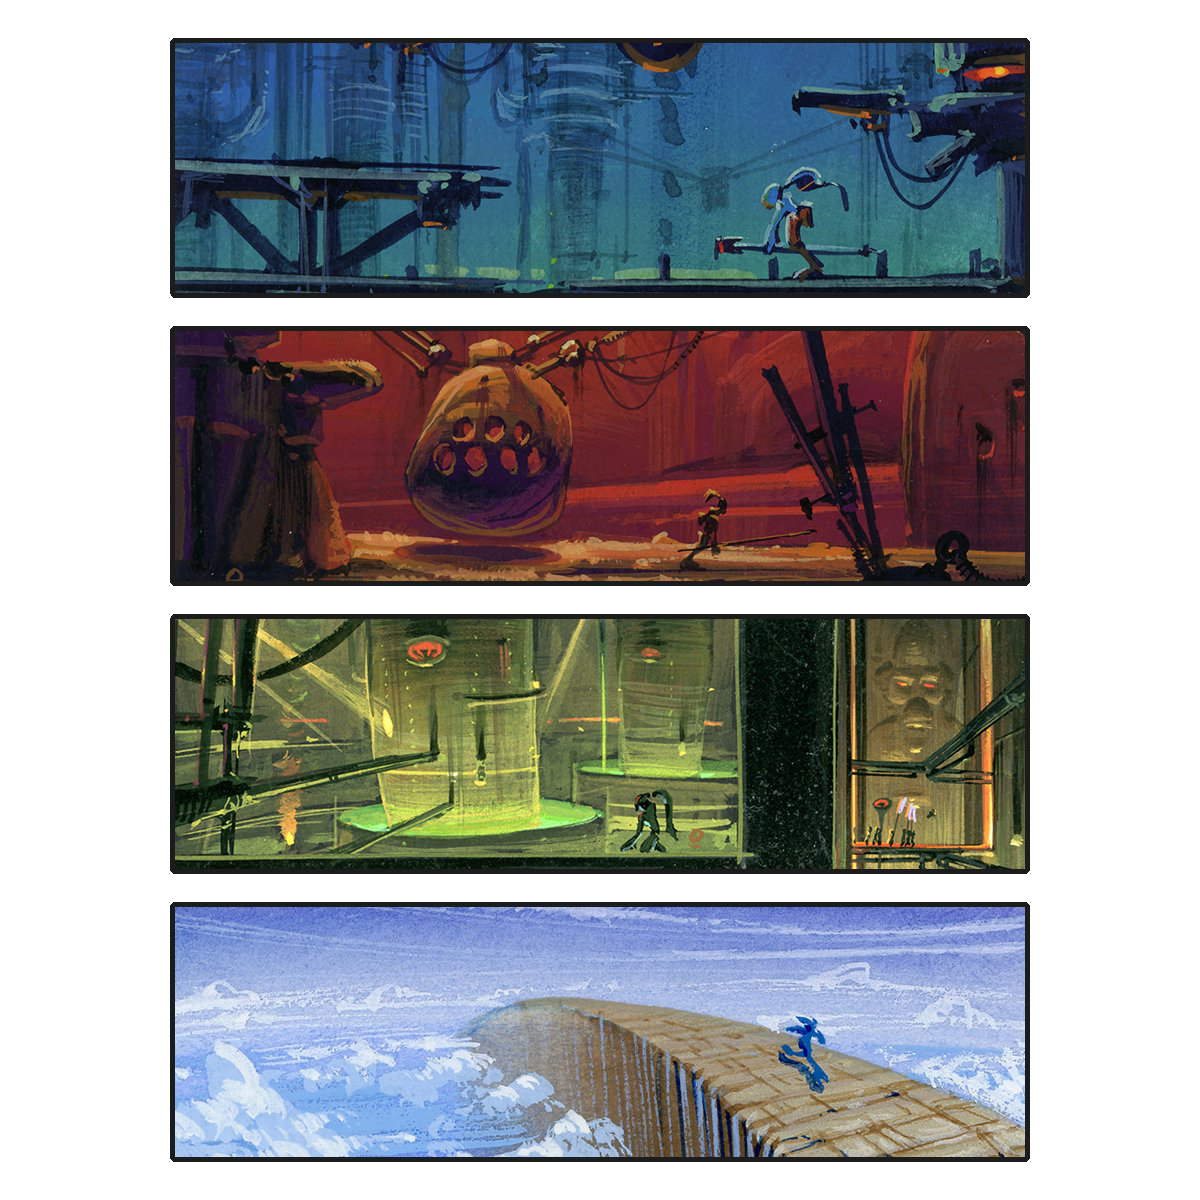 Oddworld: Abe's Origins Bookmarks - Environment Set